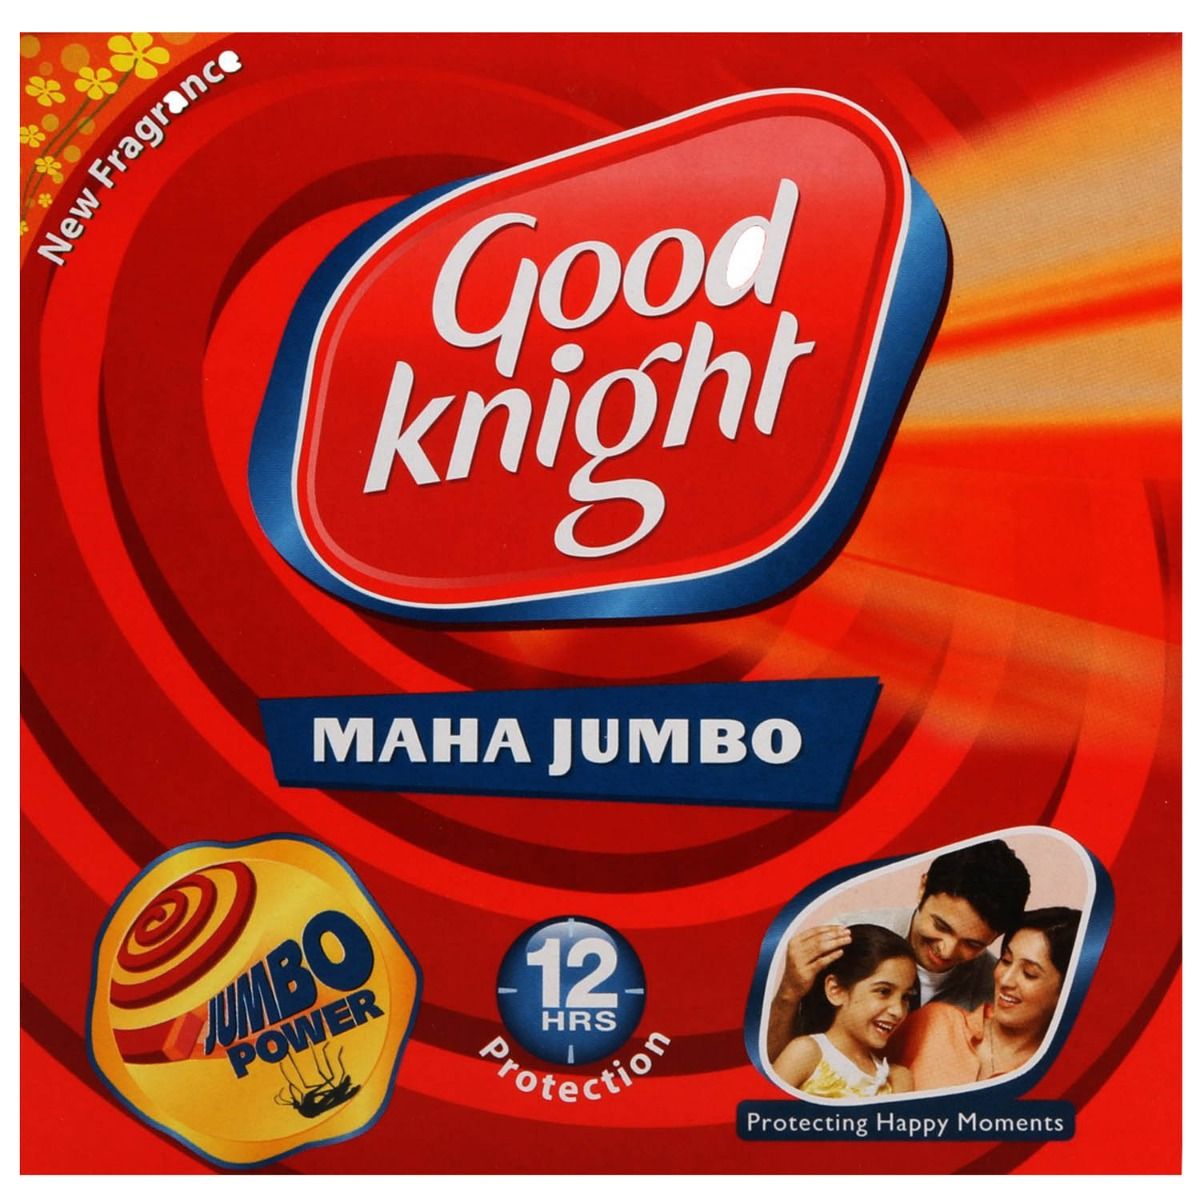 Good Knight Maha Jumbo Coil 12 Hr, Pack of 1 